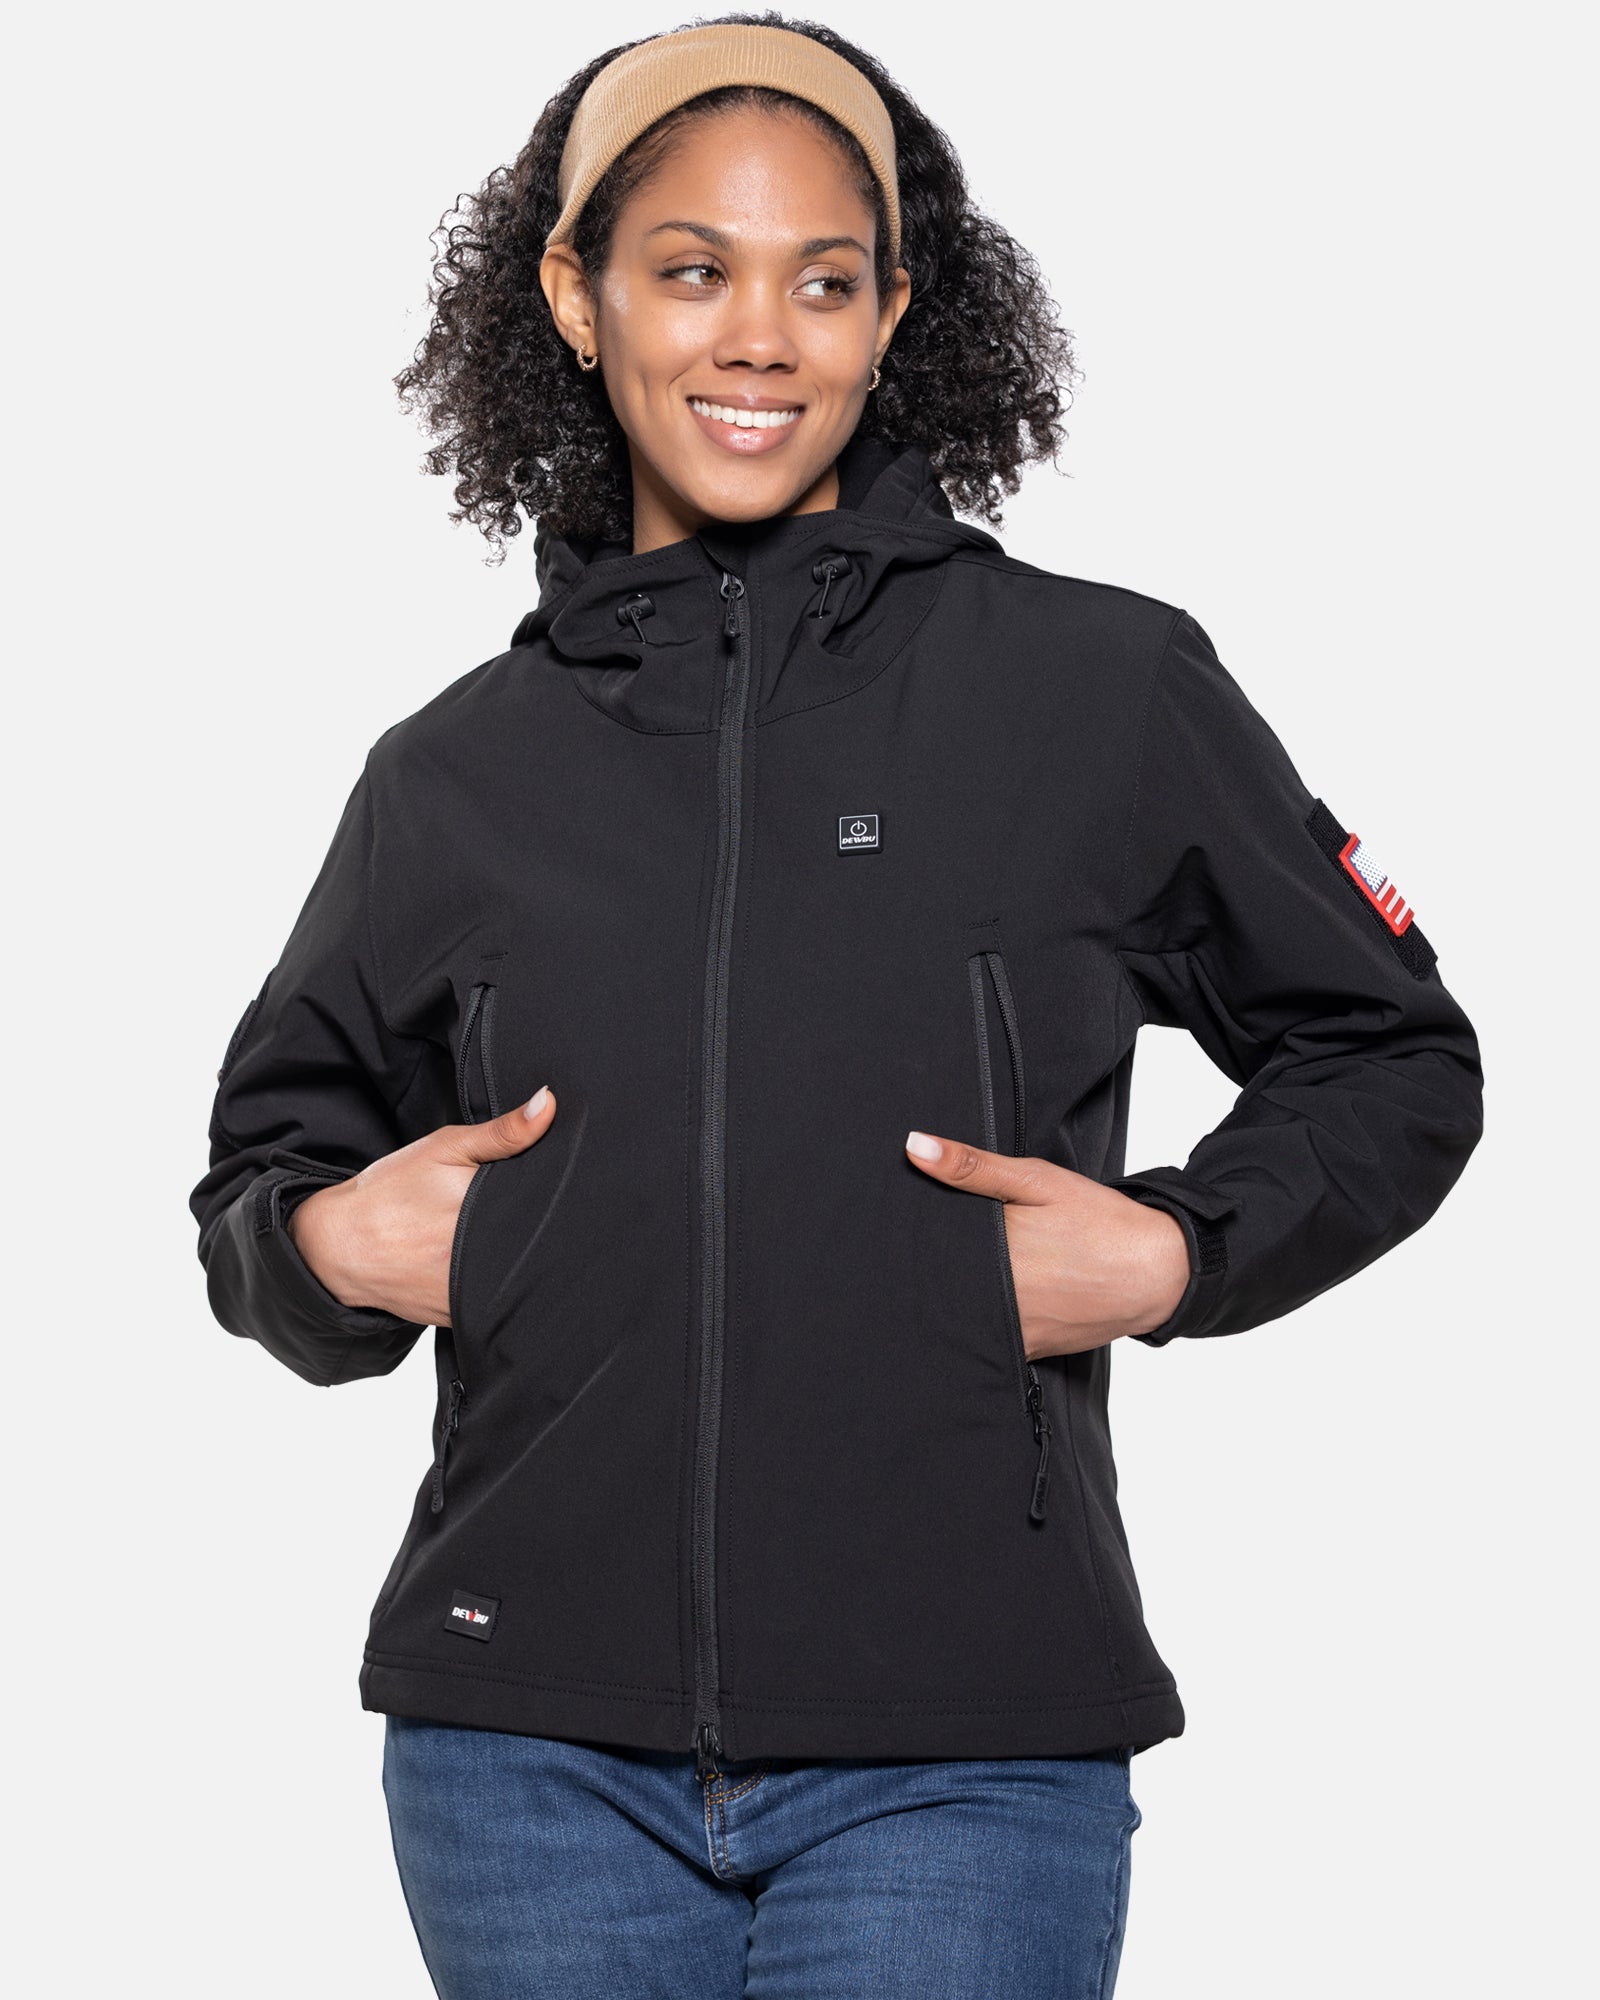 - Pack 12V DEWBU® Women\'s Heated Soft Jacket Black Battery With Shell